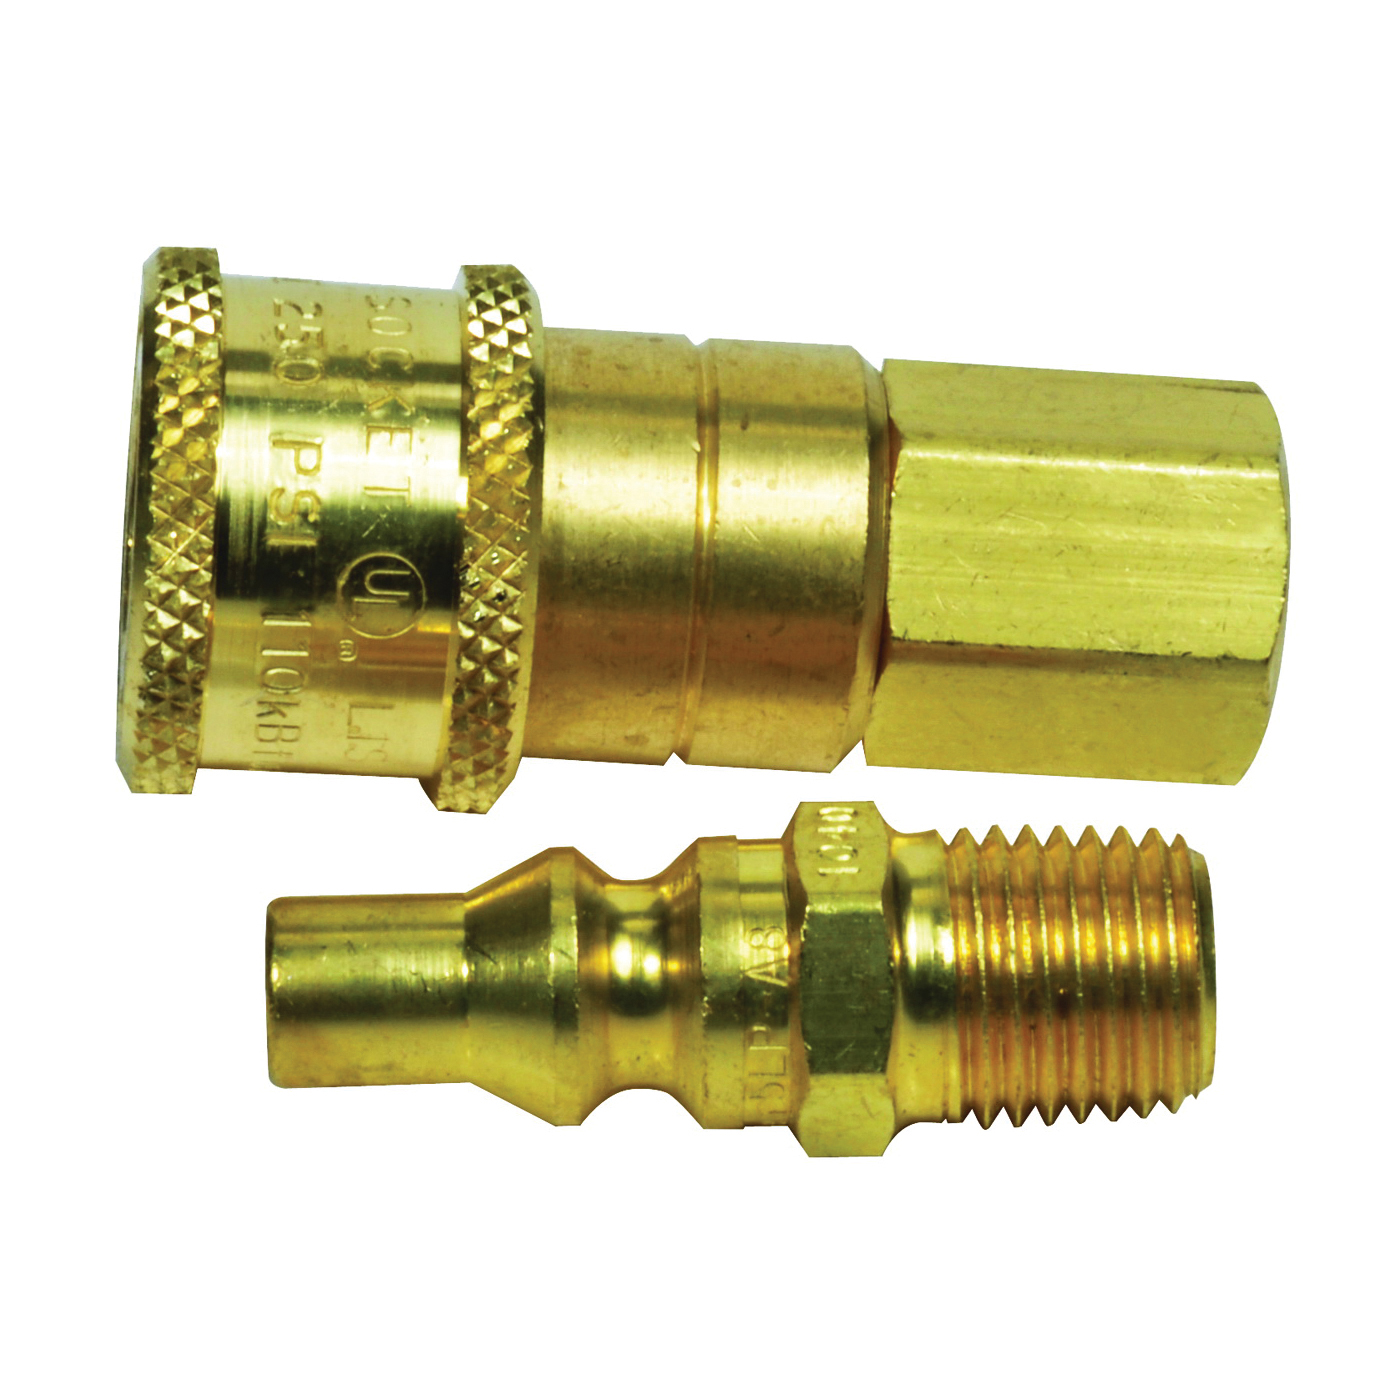 Mr. Heater F276190 Quick Connector, Brass